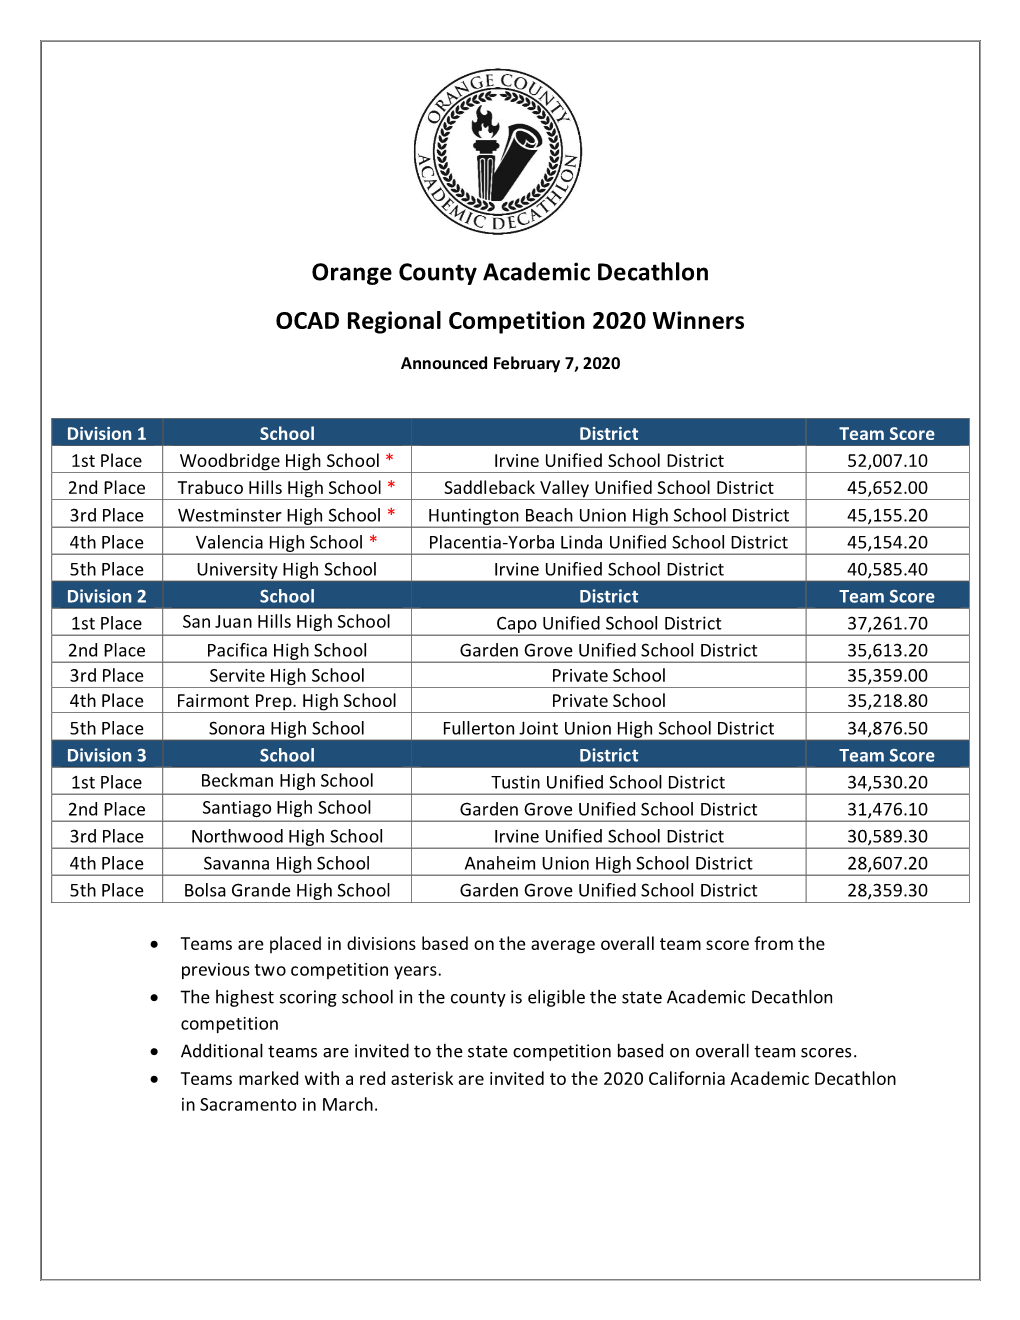 Orange County Academic Decathlon OCAD Regional Competition 2020 Winners